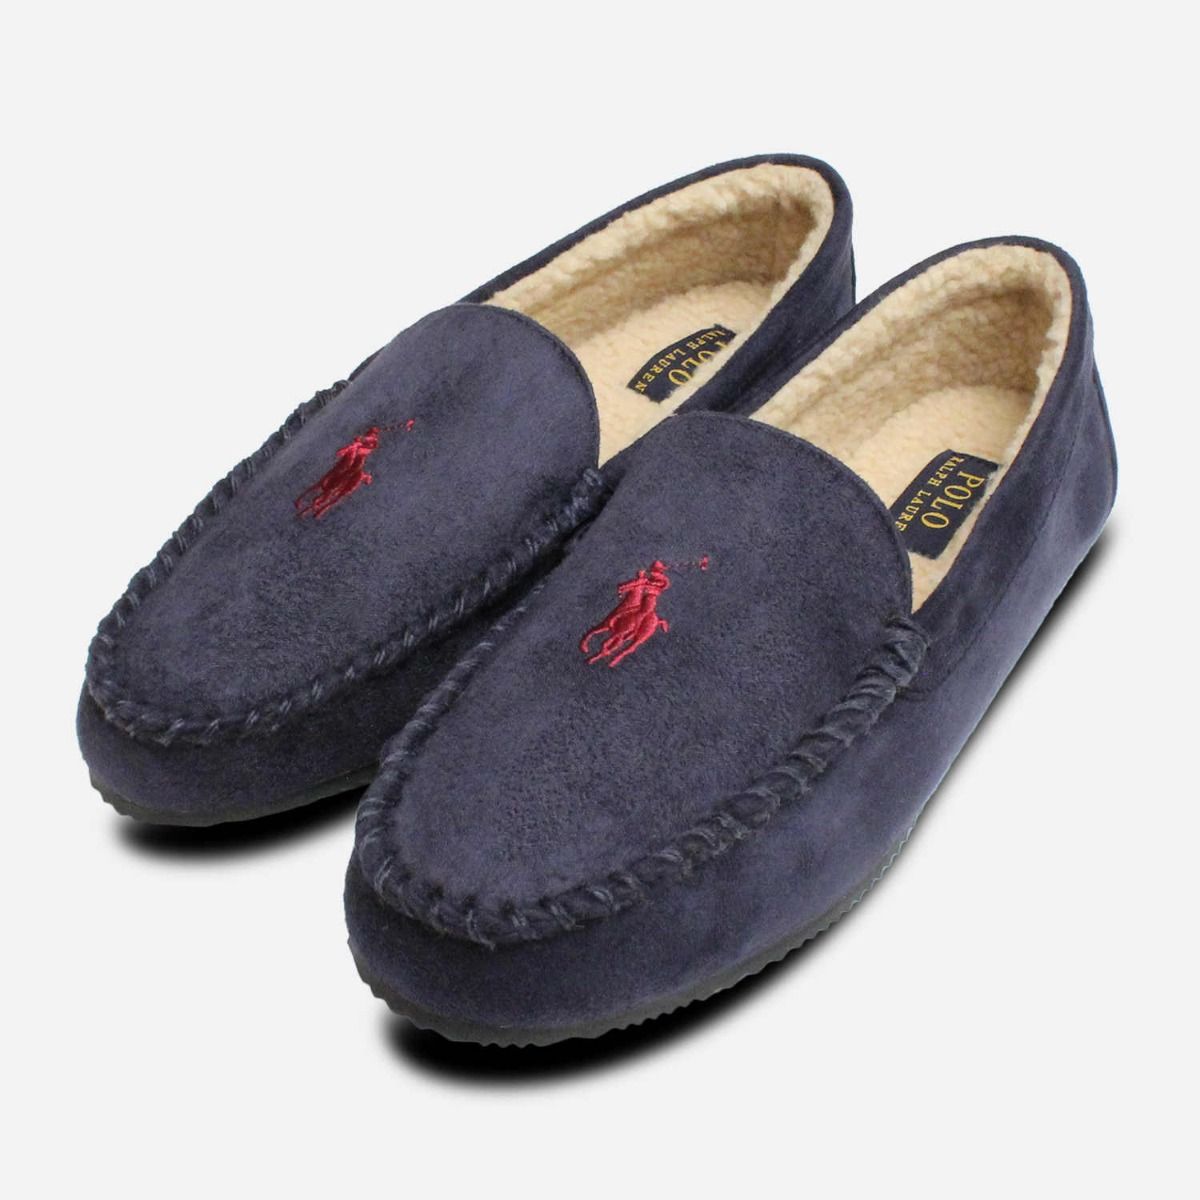 mens slippers navy blue